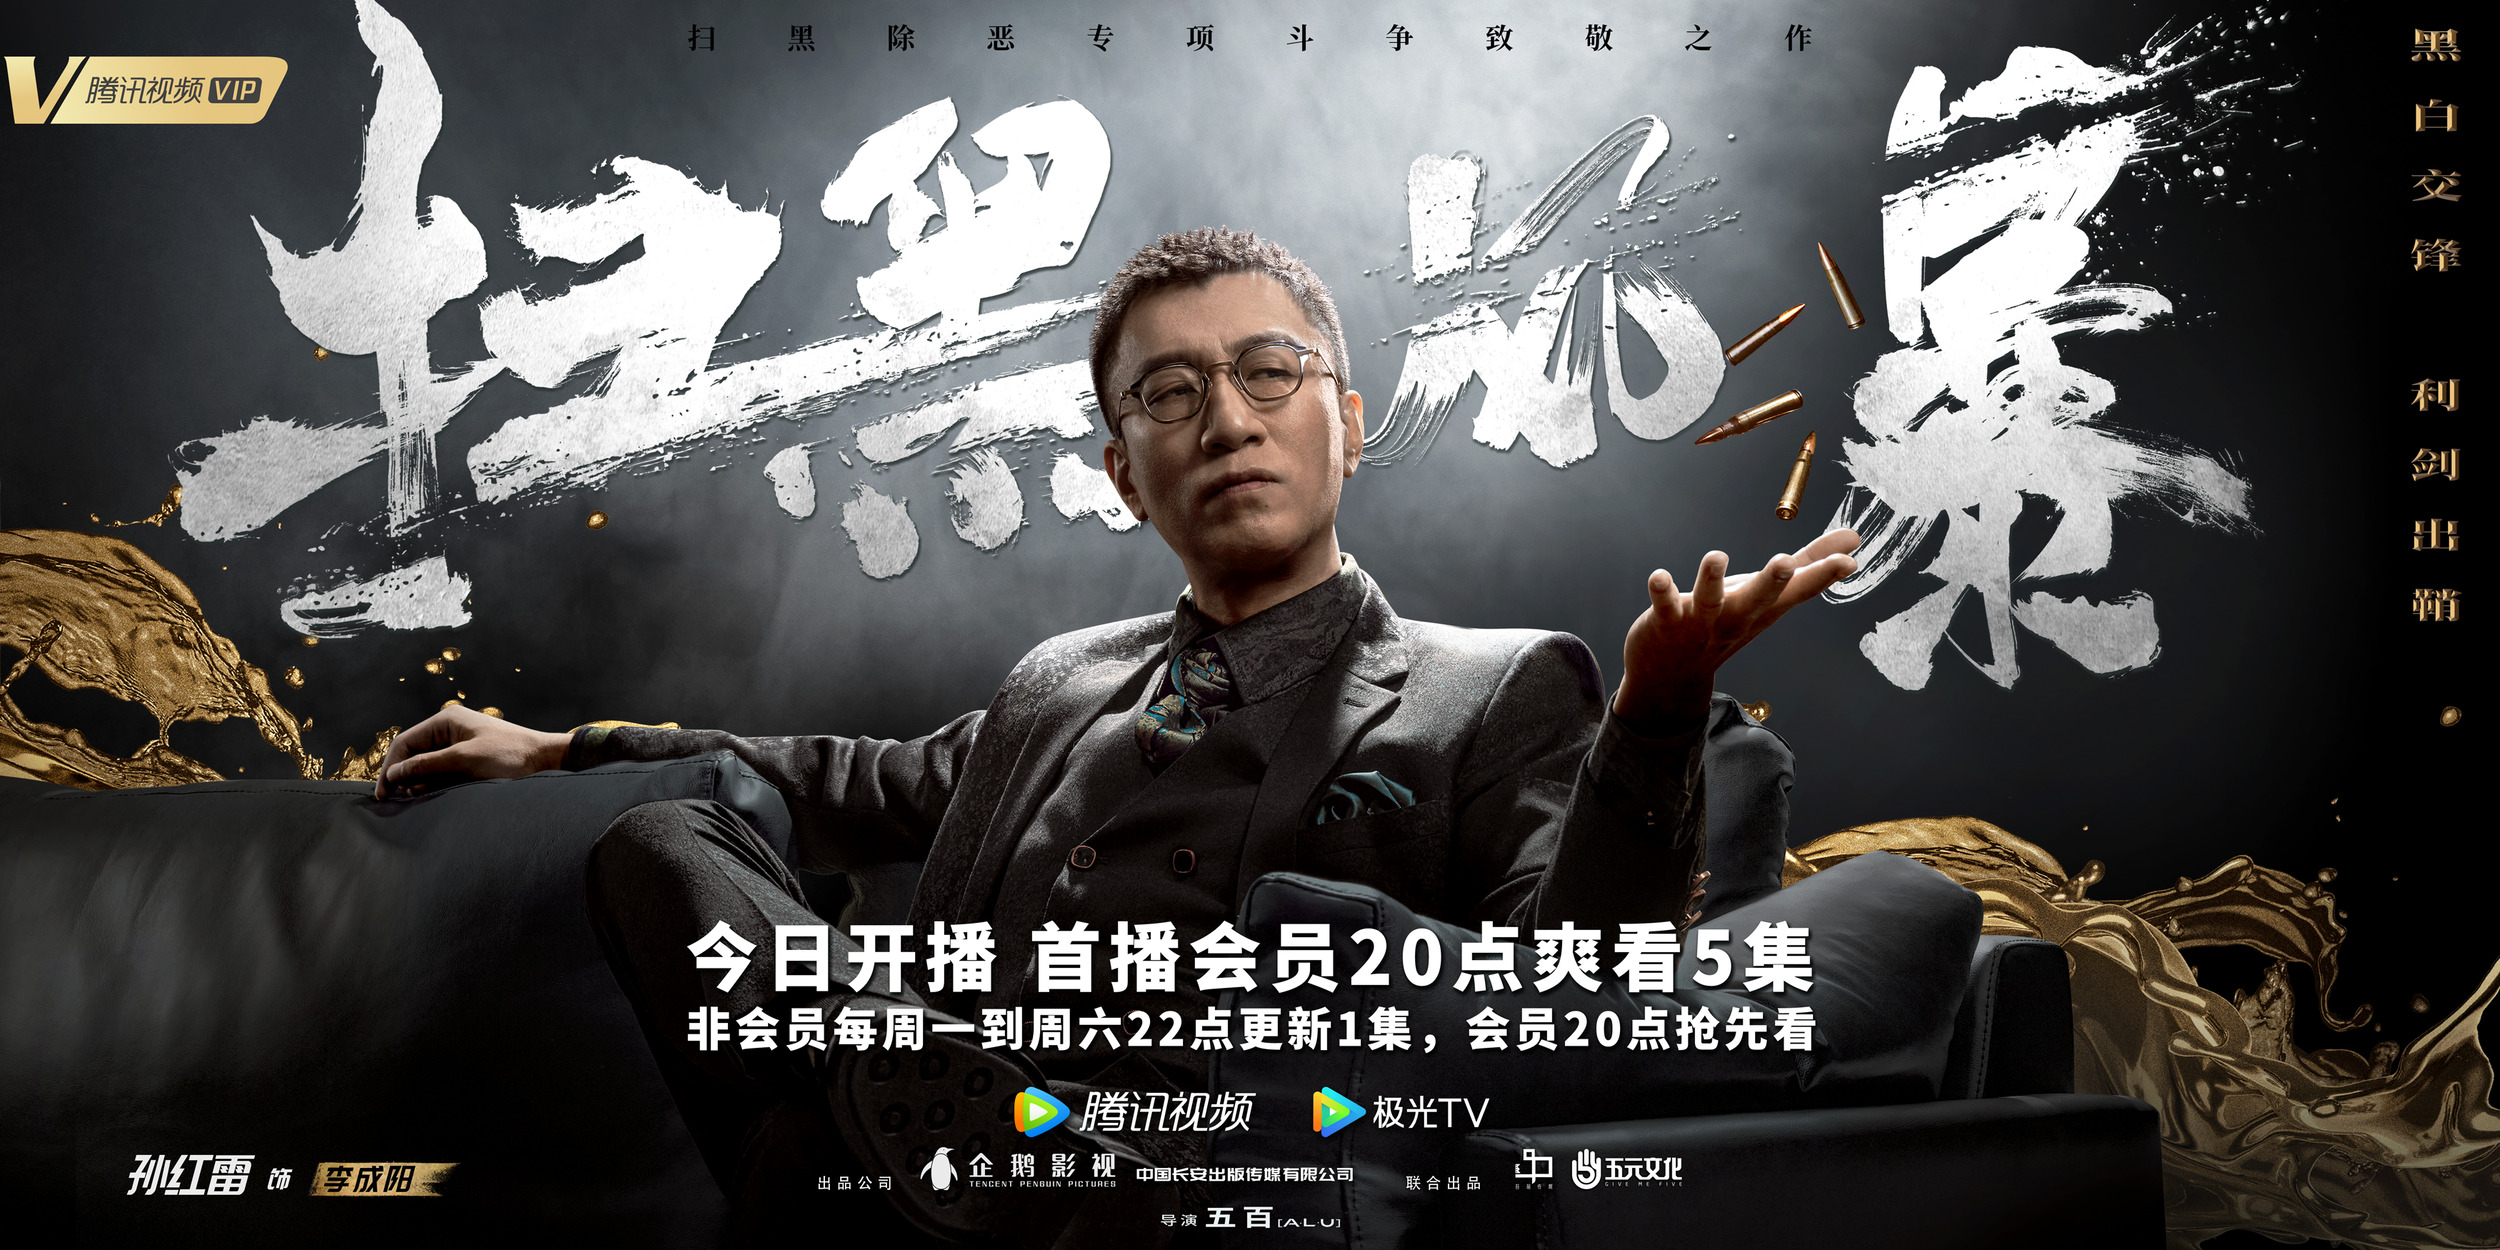 Mega Sized TV Poster Image for Sao hei feng bao (#8 of 9)